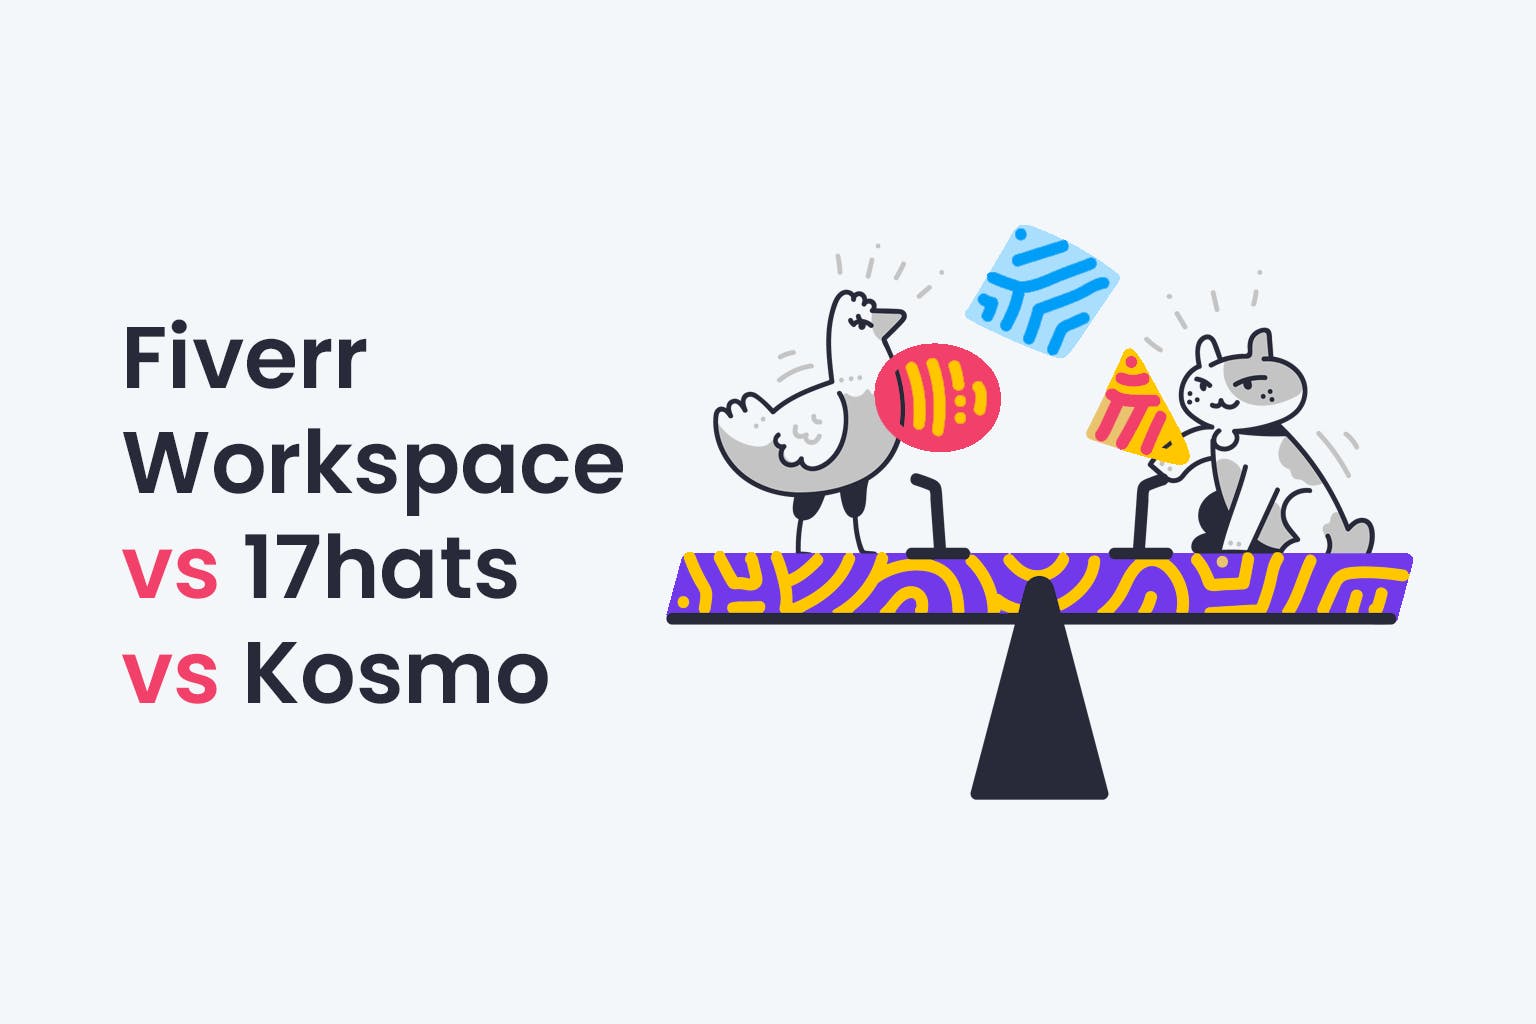 Fiverr Workspace vs 17hats vs Kosmo